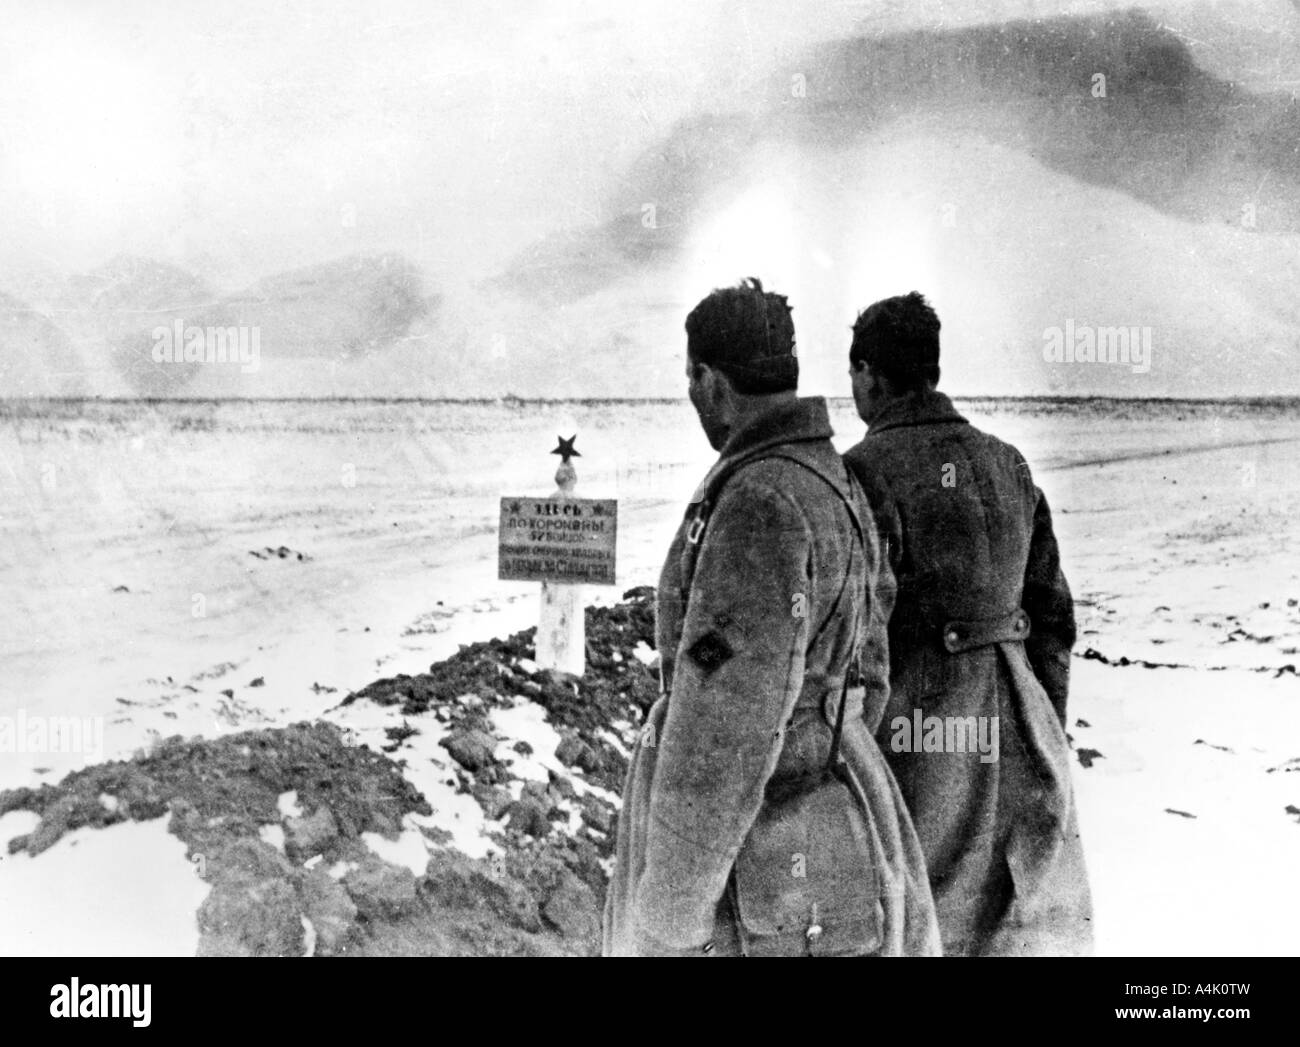 Battle of stalingrad 1943 Black and White Stock Photos & Images - Alamy